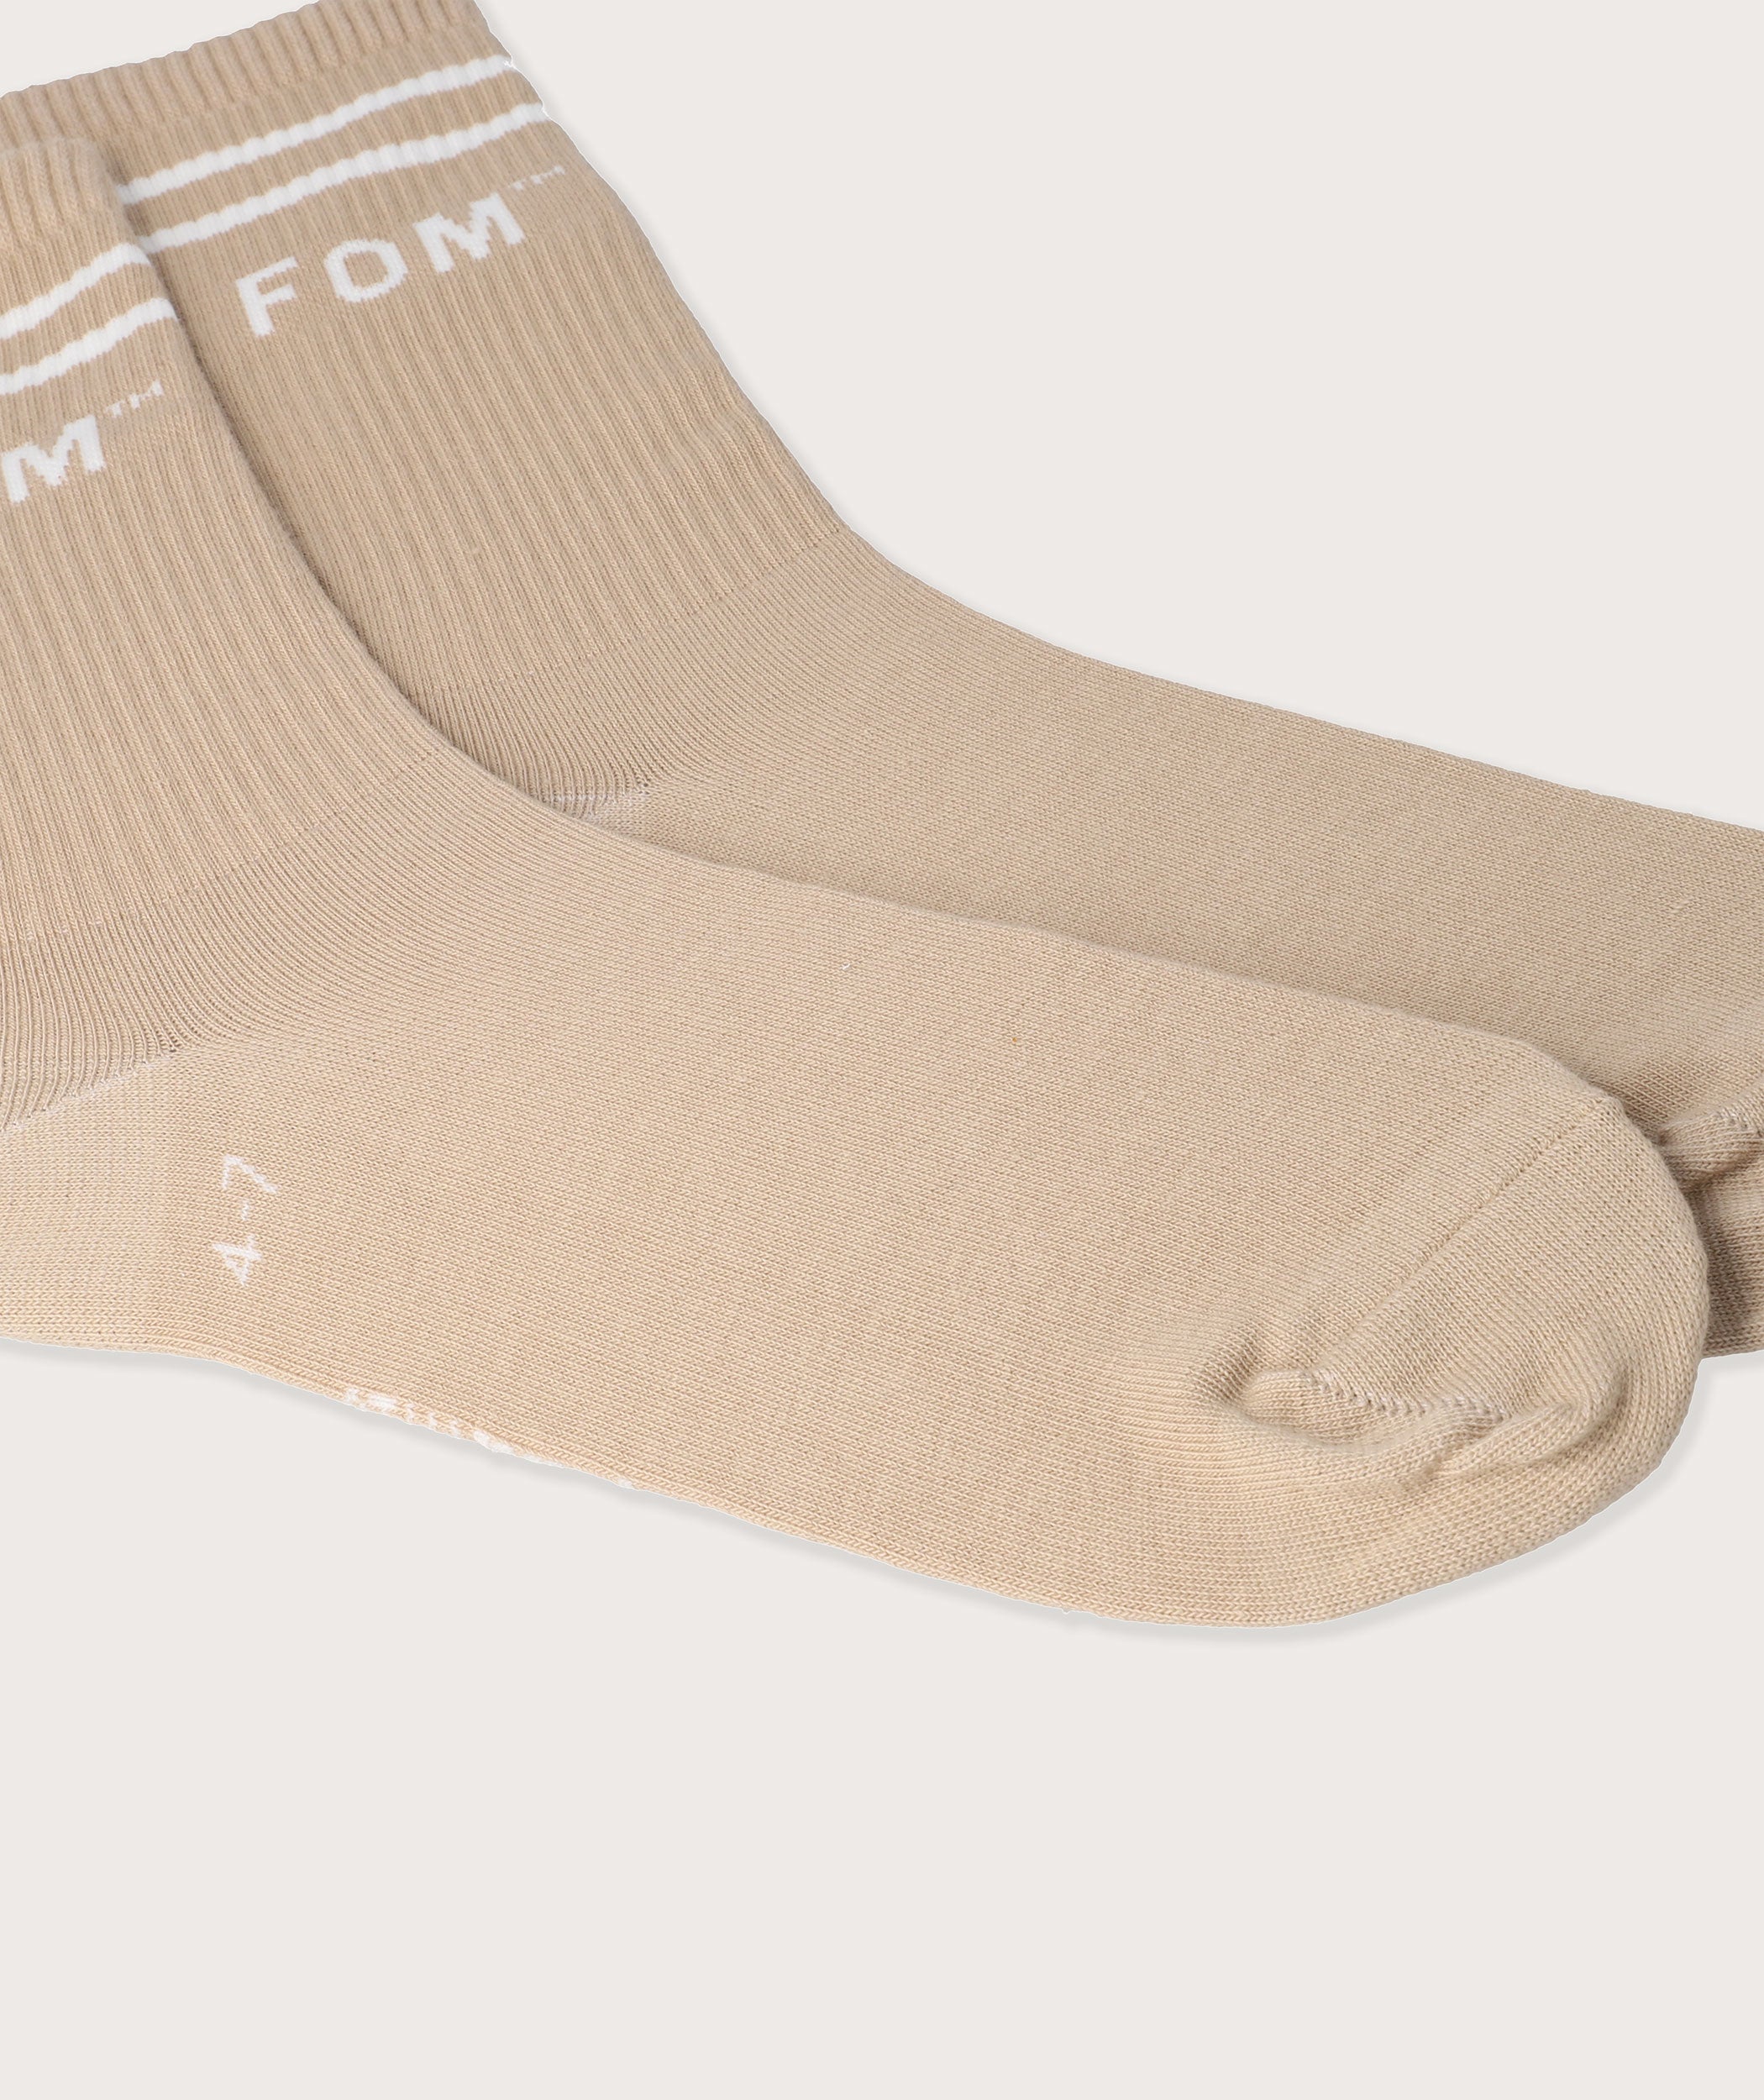 Socks FOM Crew Stone / White Stripes (Size 4-7)